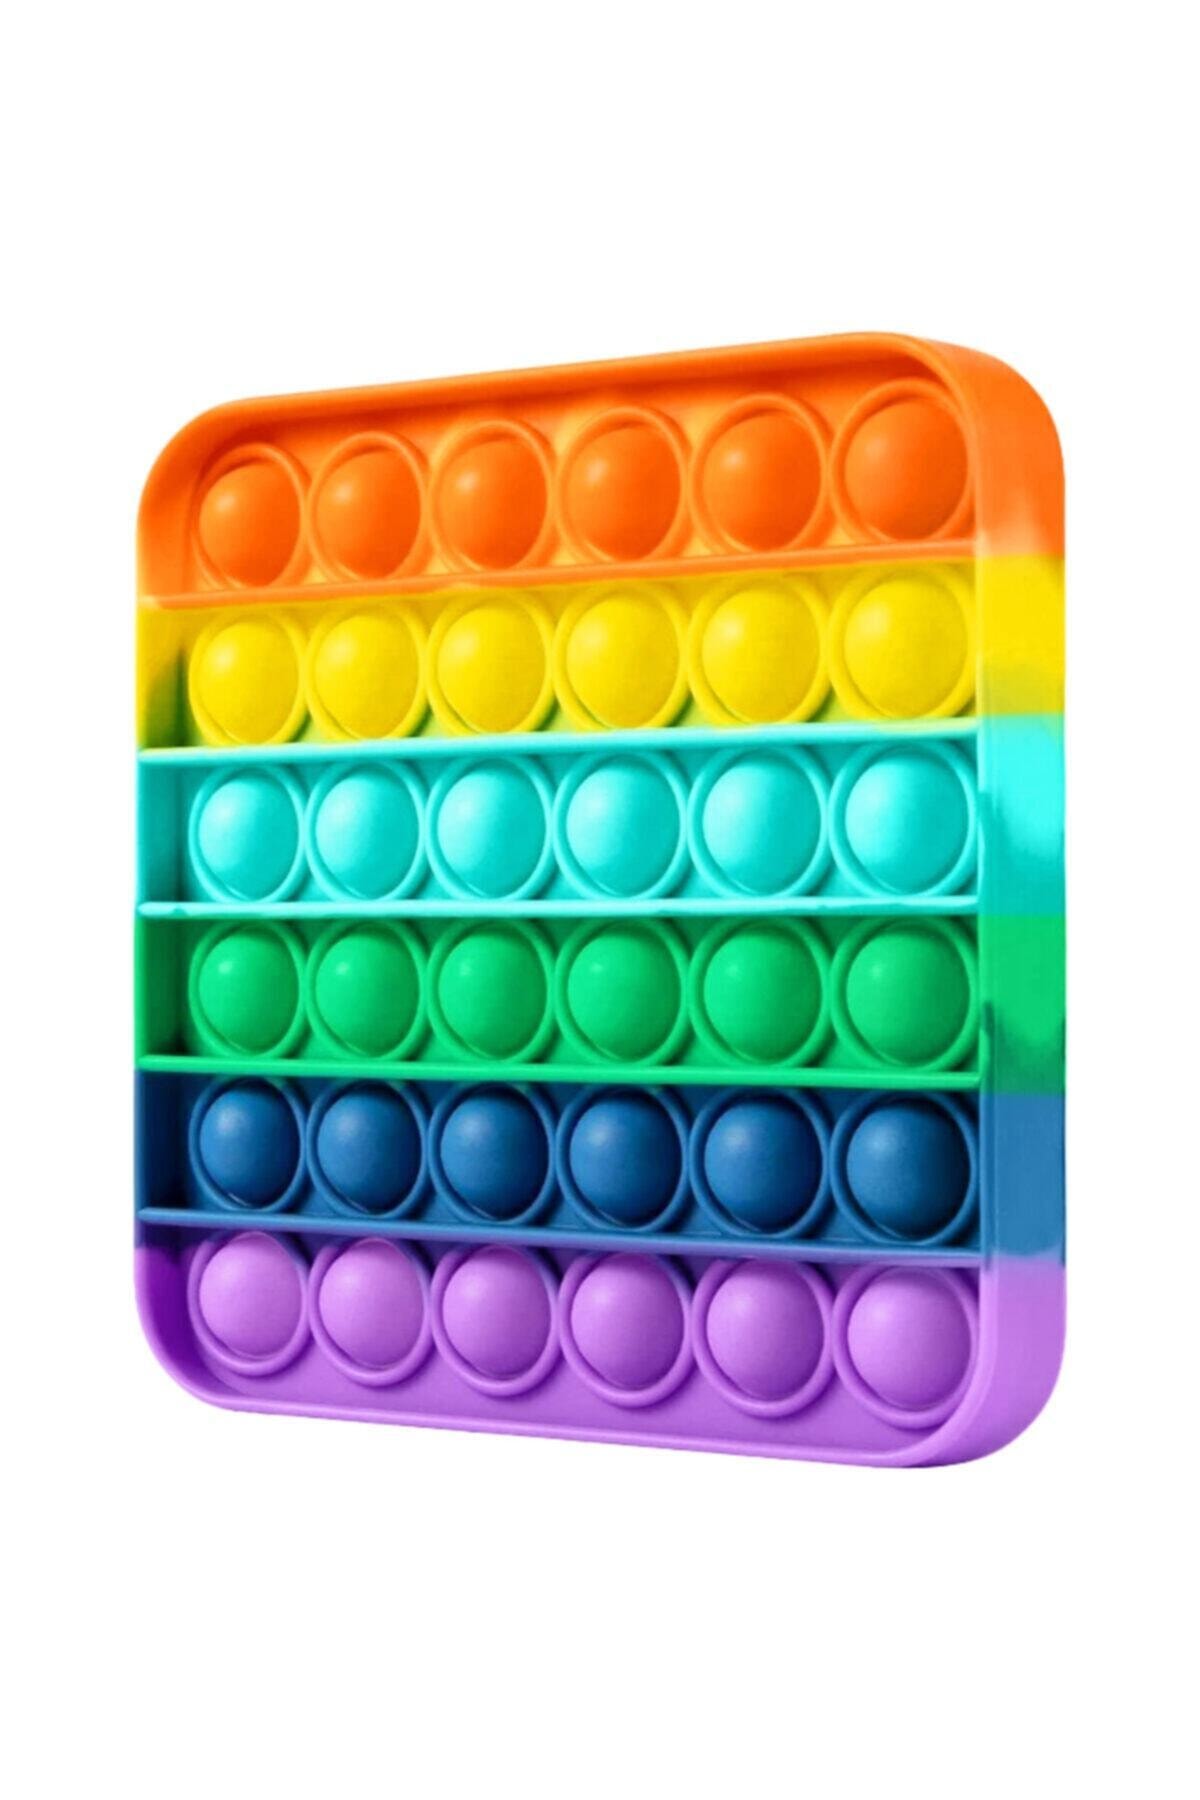 Özel Pop Duyusal Oyuncak Zihinsel Stres ( Rainbow Renk, Kare )